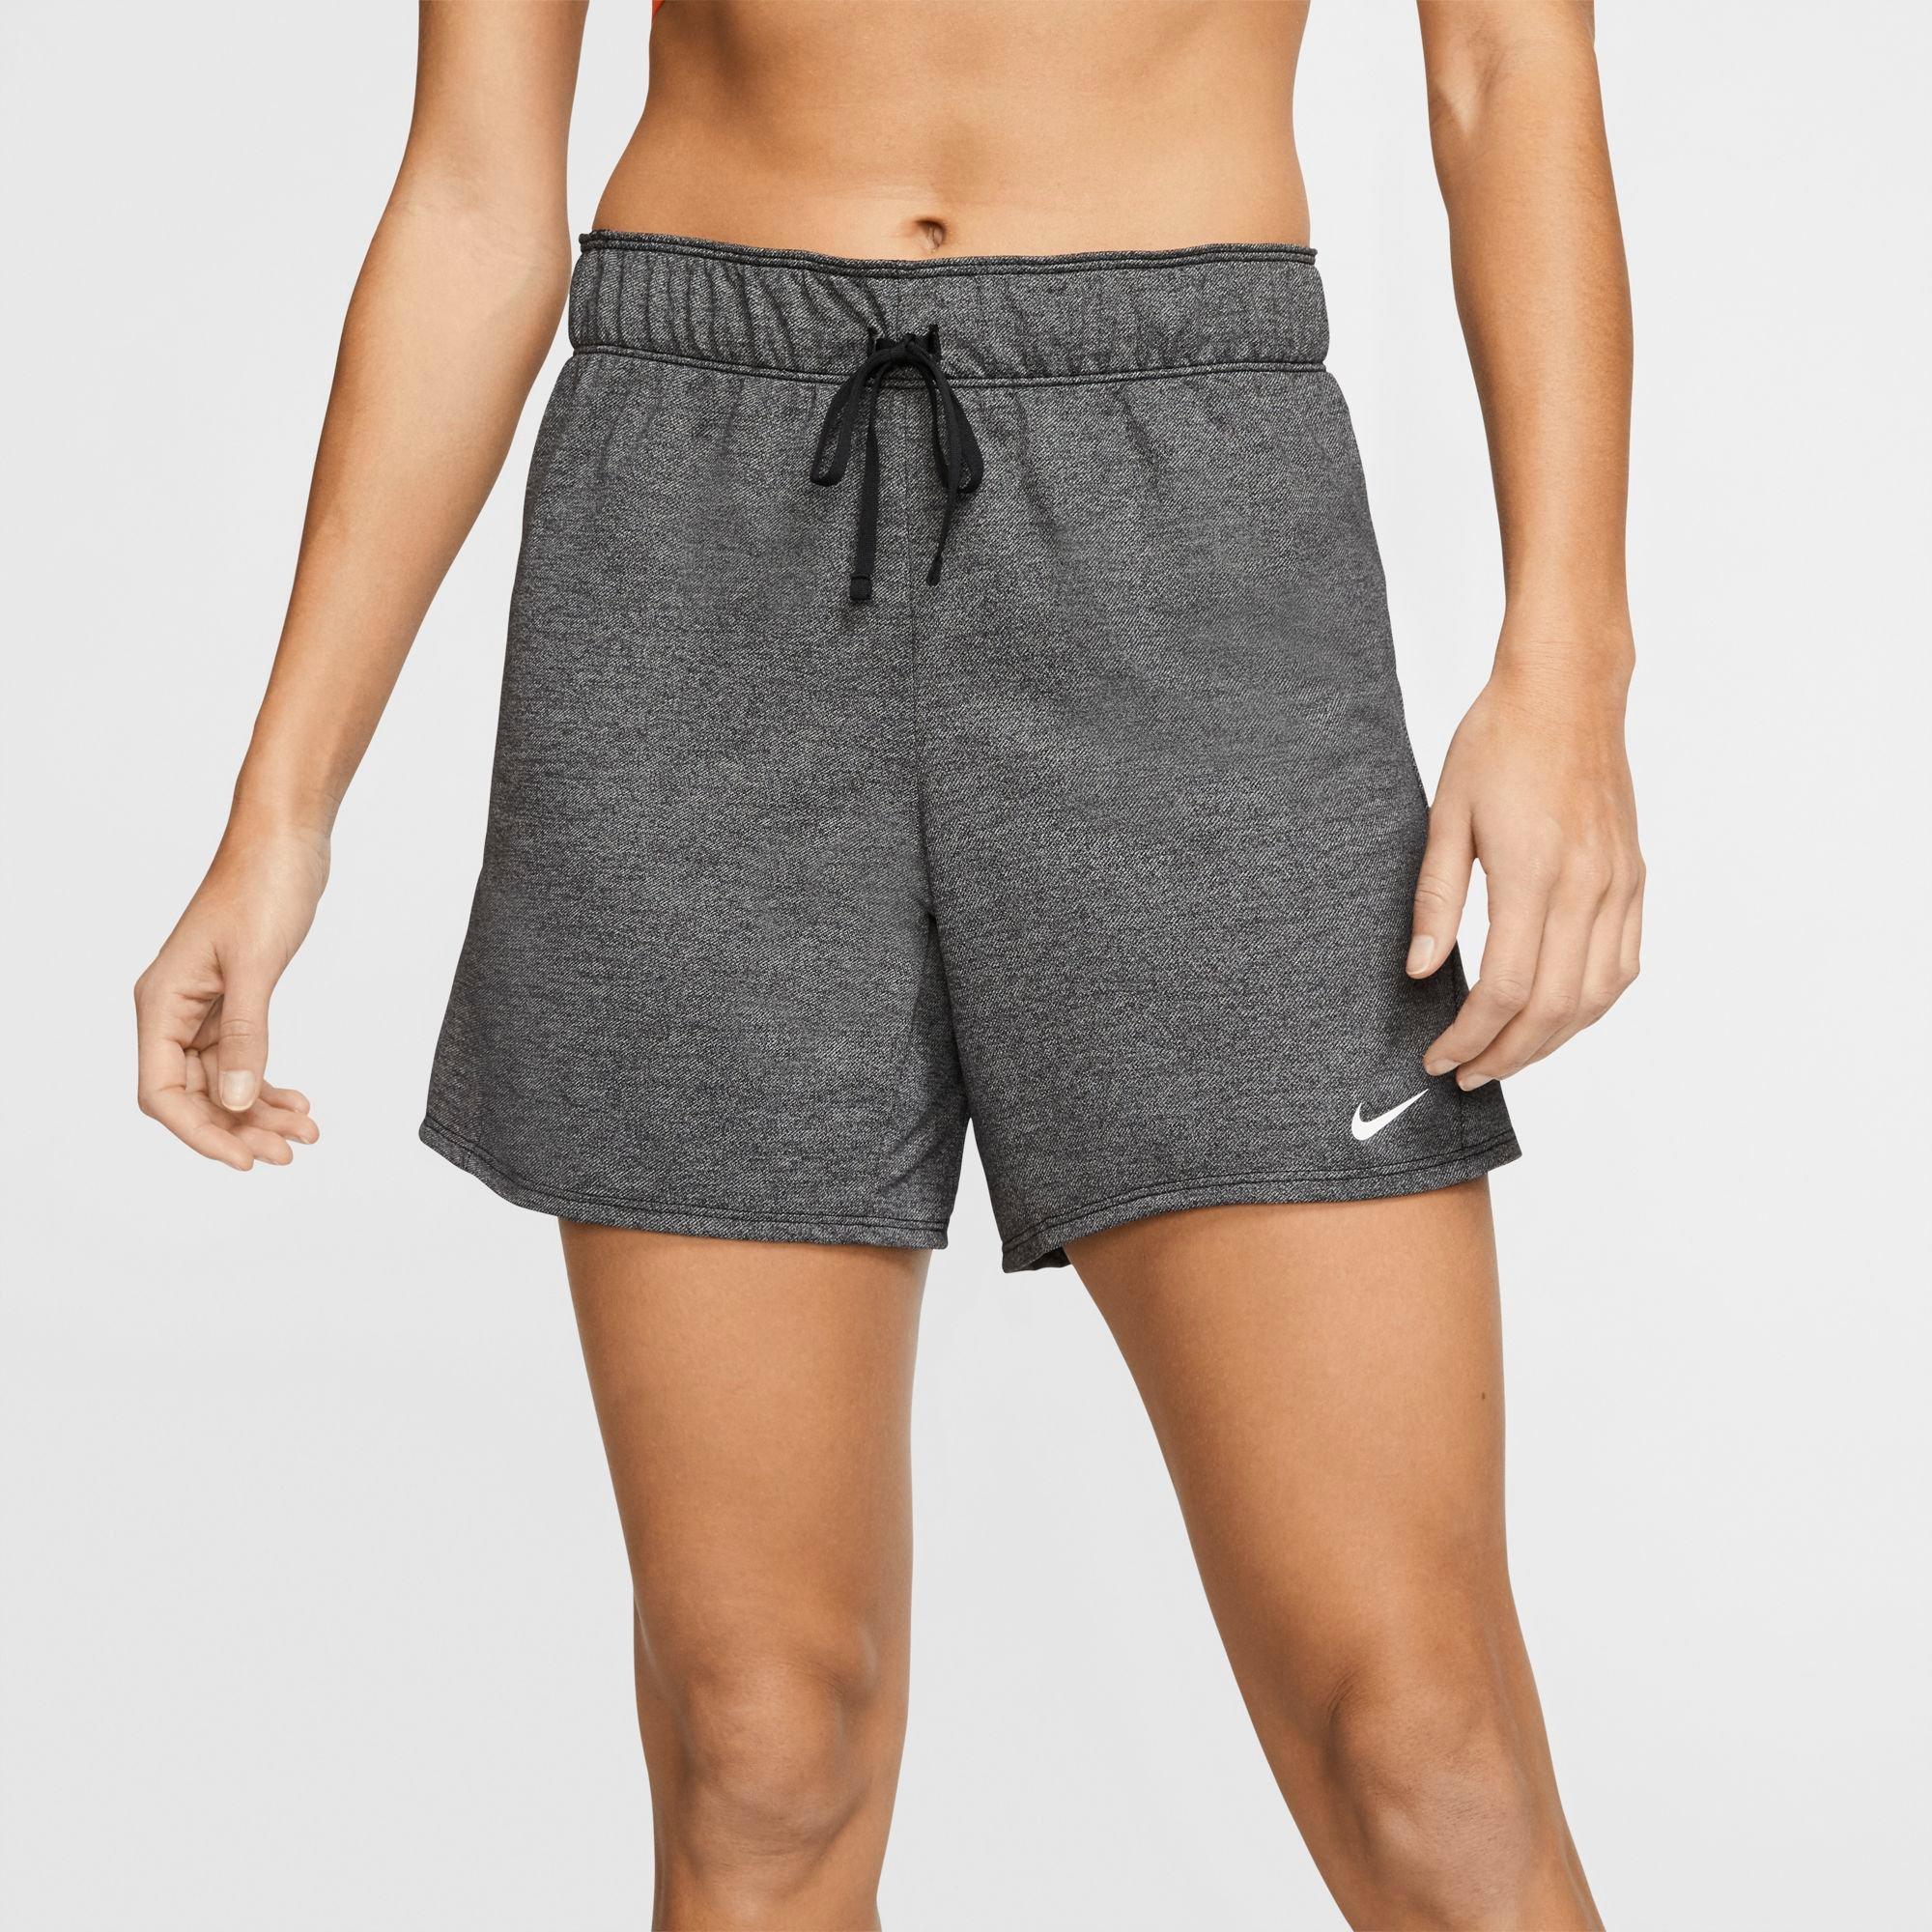 nike workout shorts womens